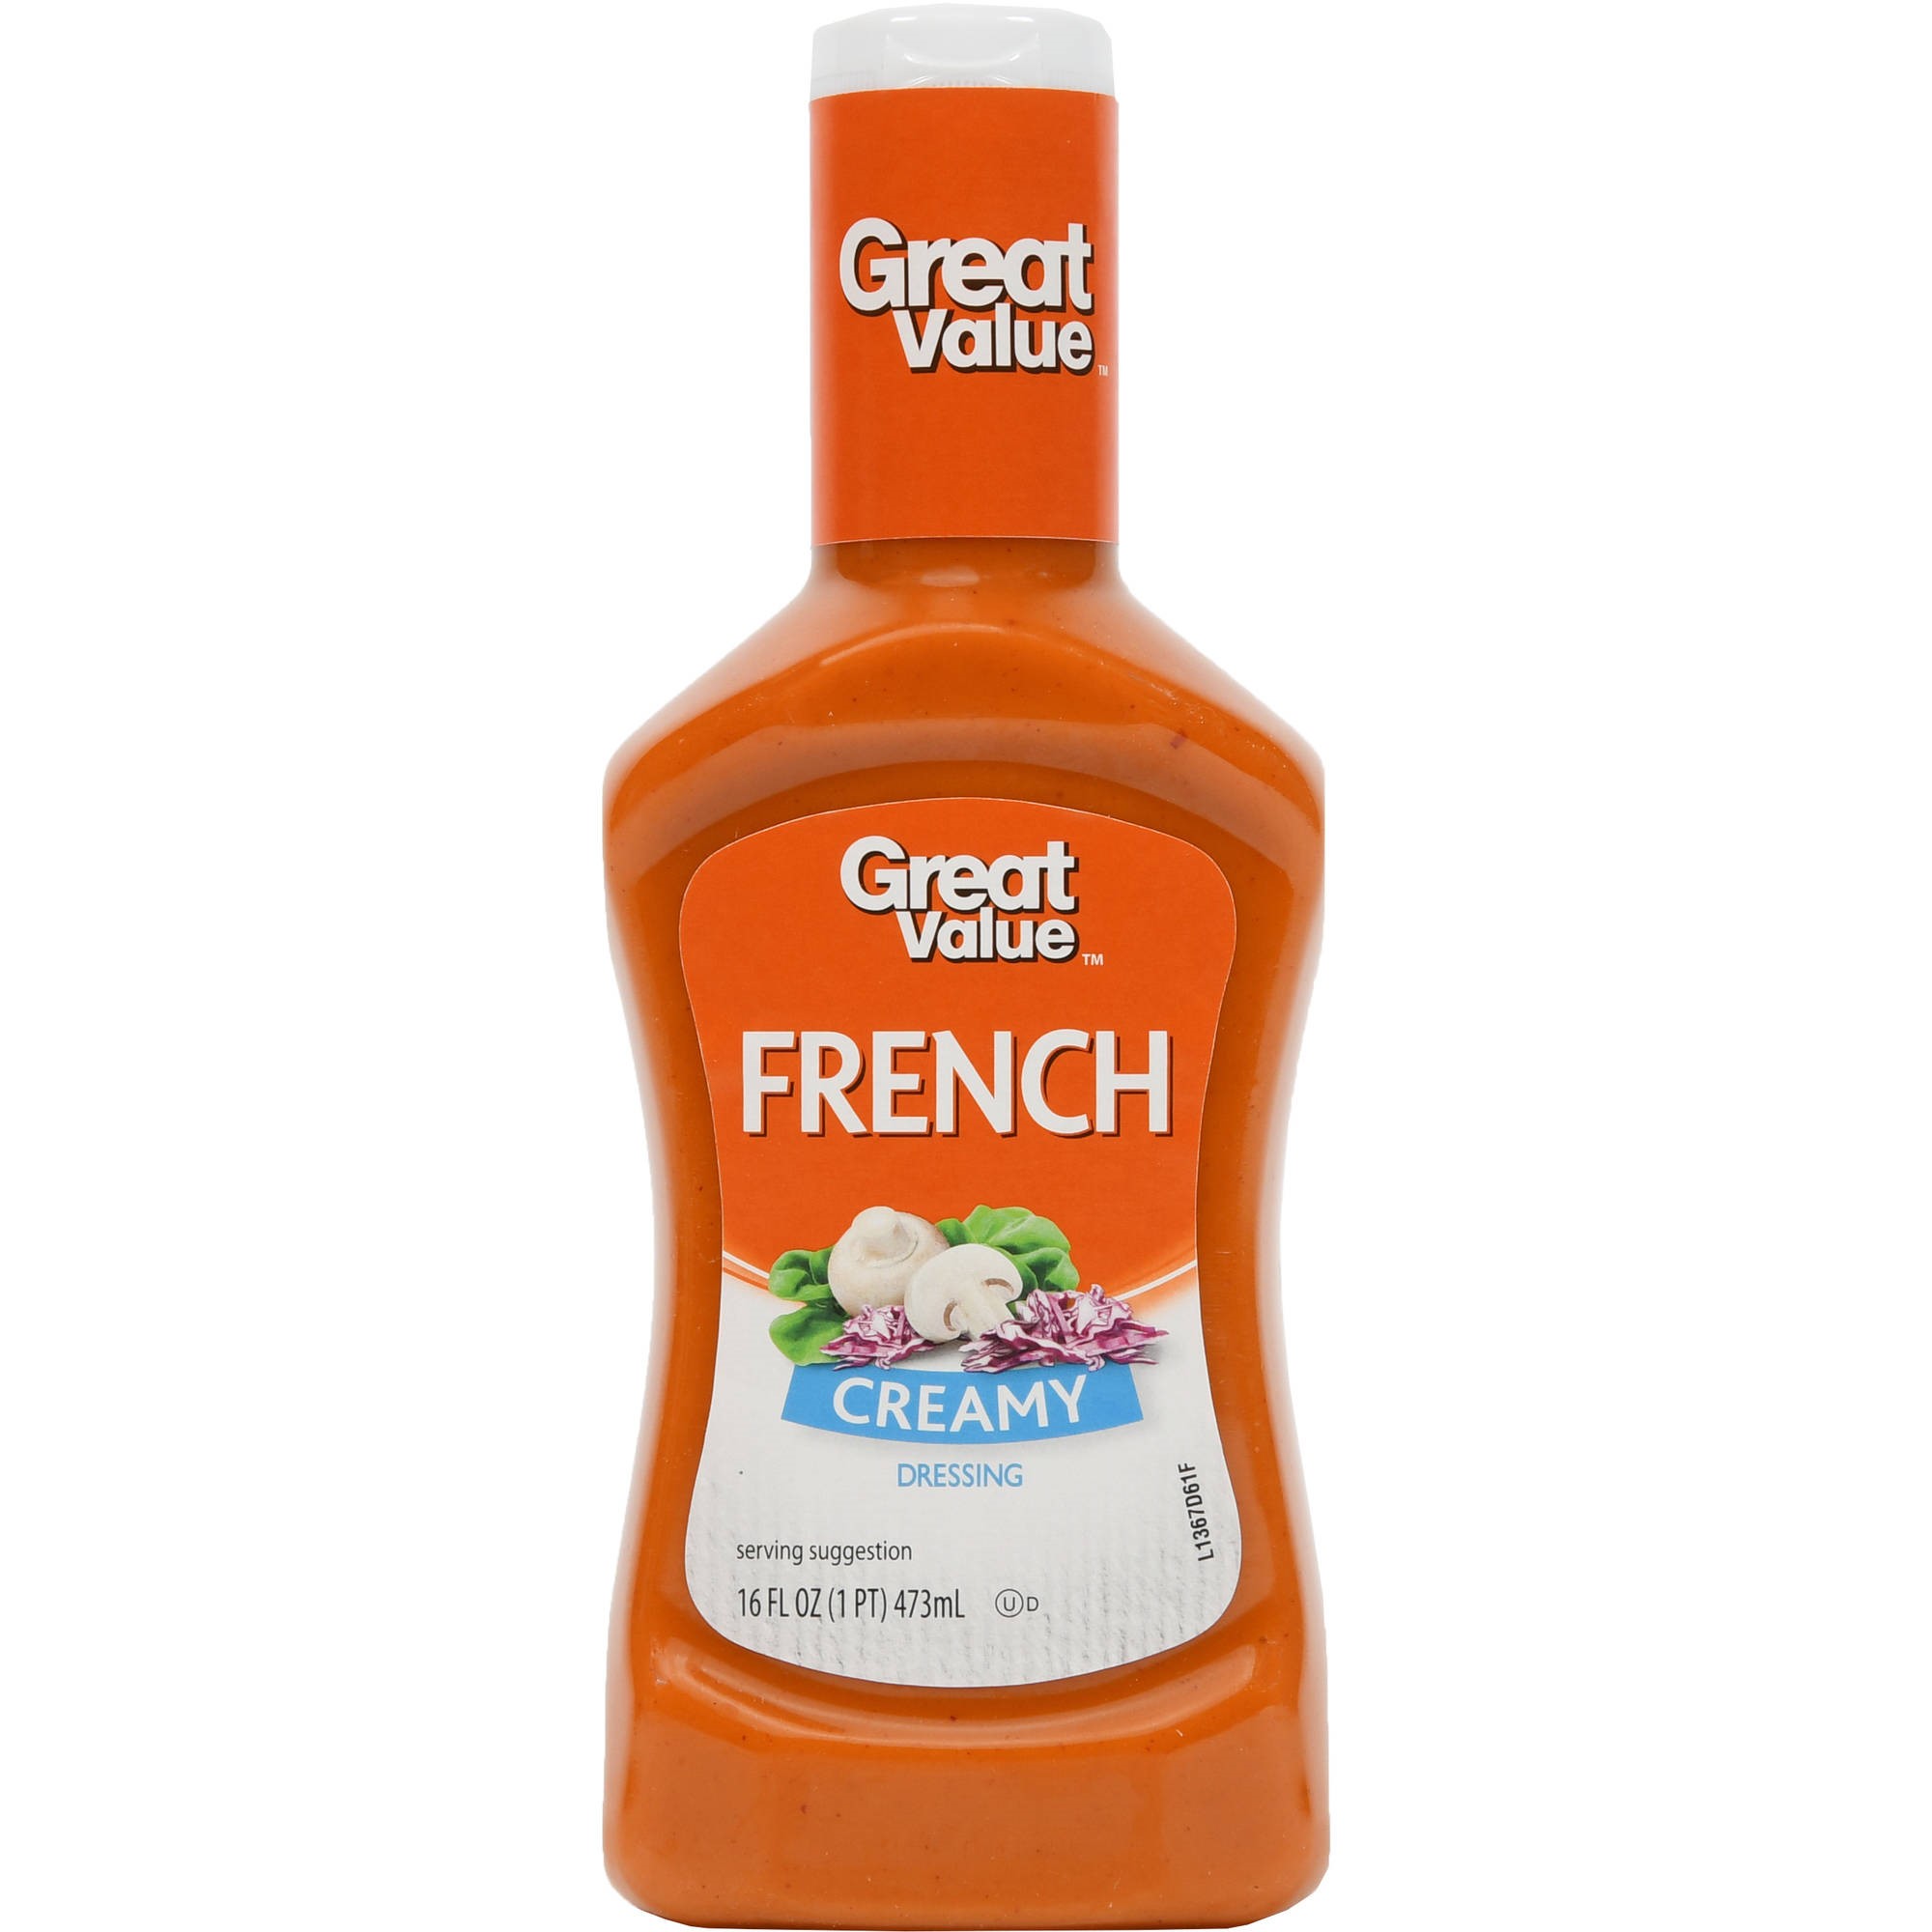 Great Value Creamy French Dressing, 16 oz - Walmart.com - Walmart.com